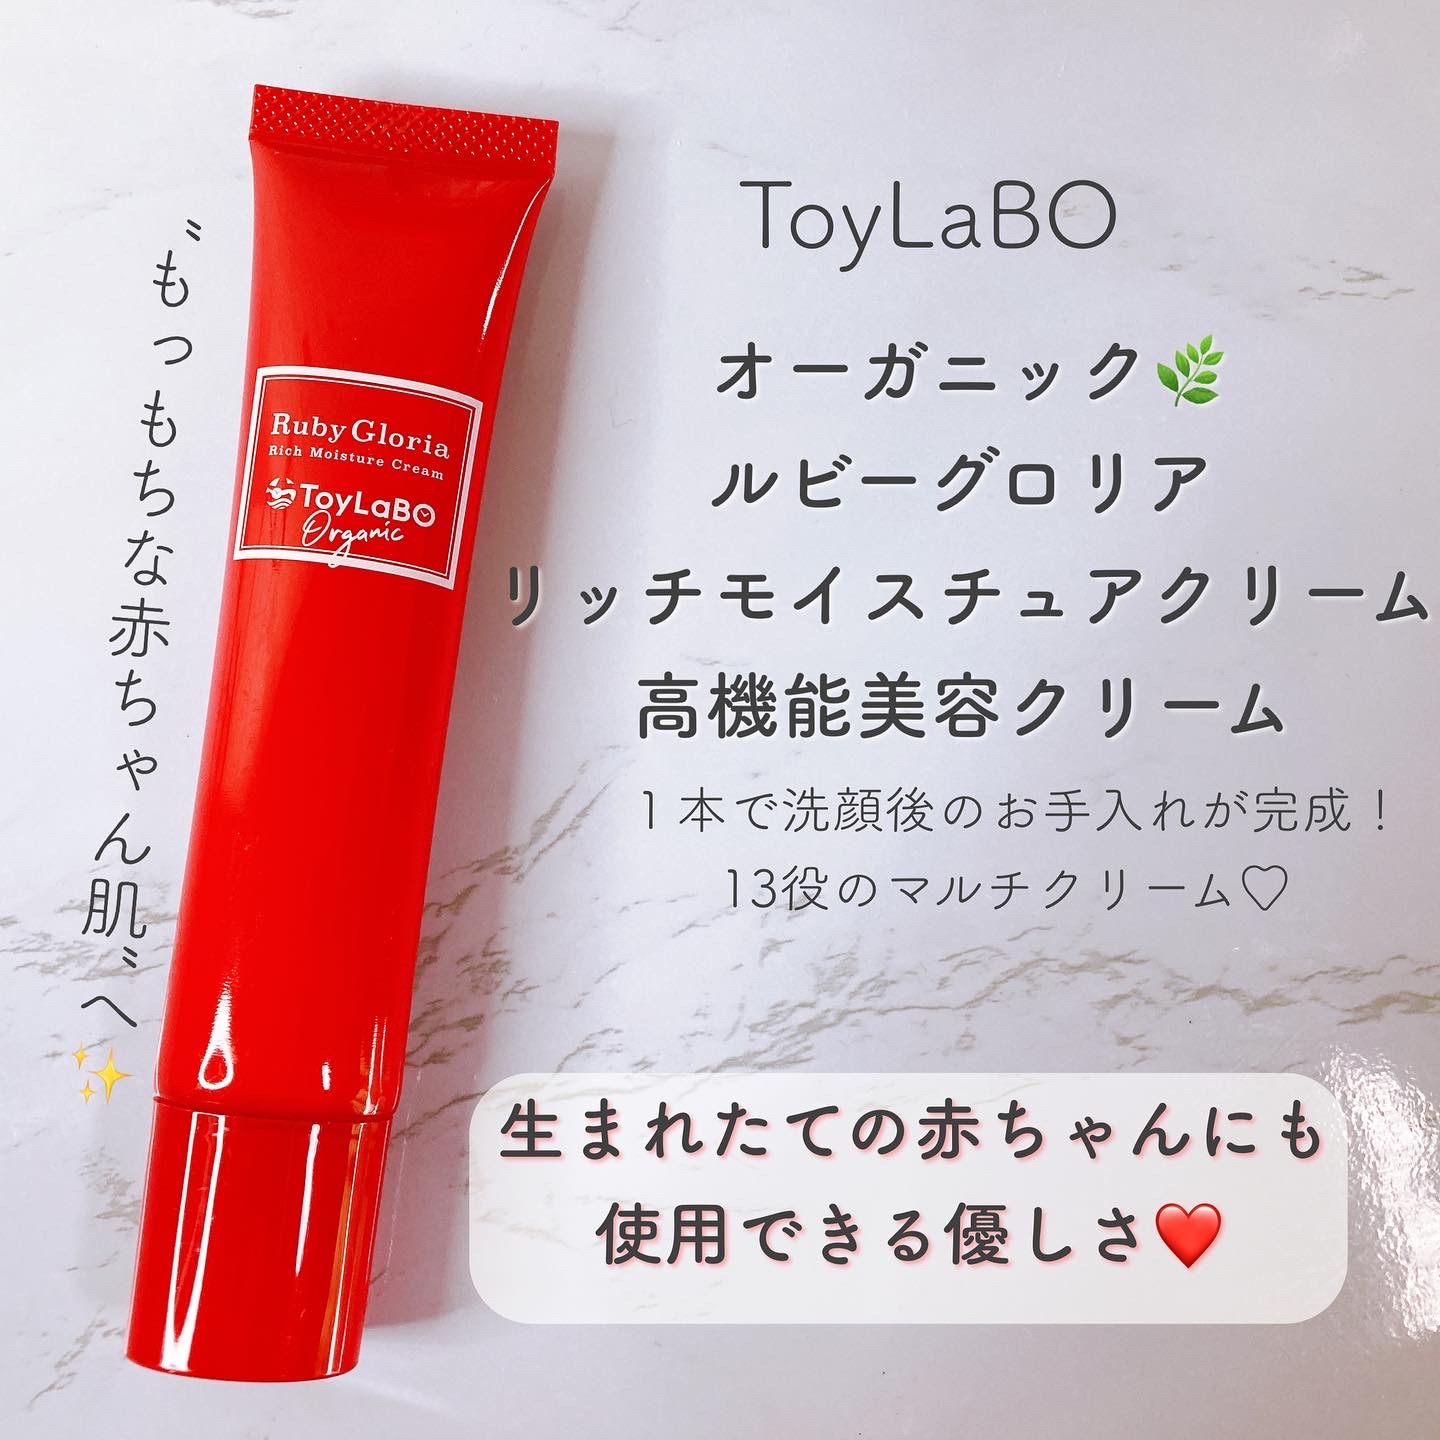 ToyLaBO(トイラボ) ルビーグロリア リッチモイスチュアクリームの良い点・メリットに関するメグさんの口コミ画像1